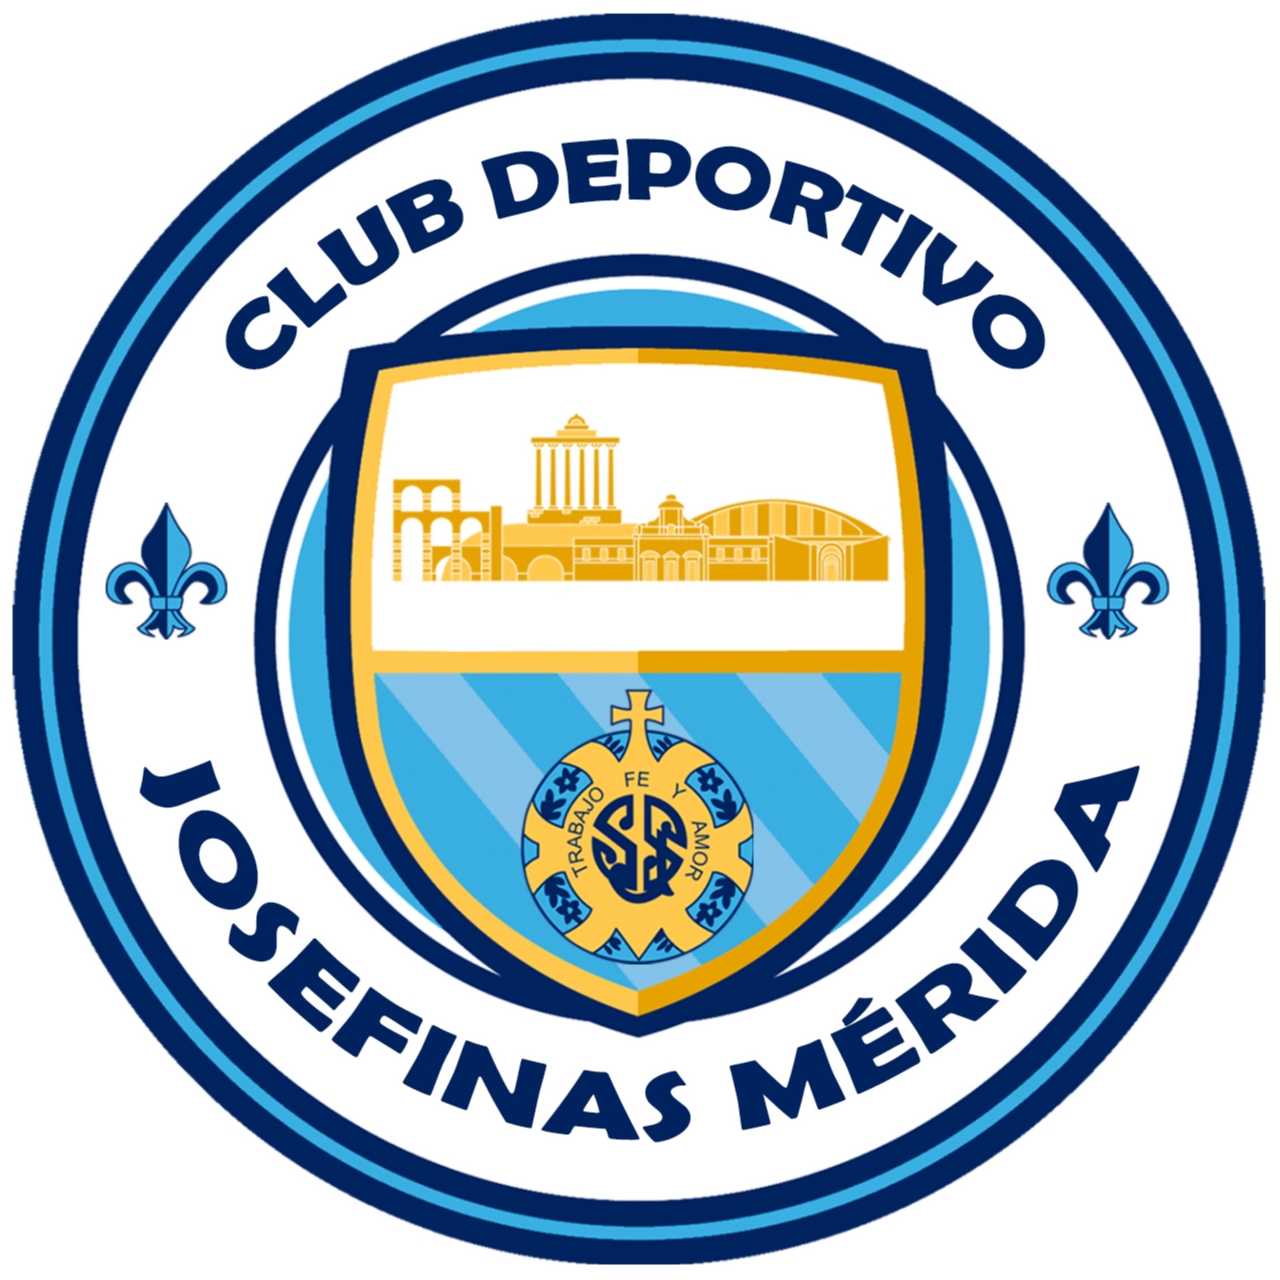 CLUB DEPORTIVO JOSEFINAS MÃRIDA - BLANCO